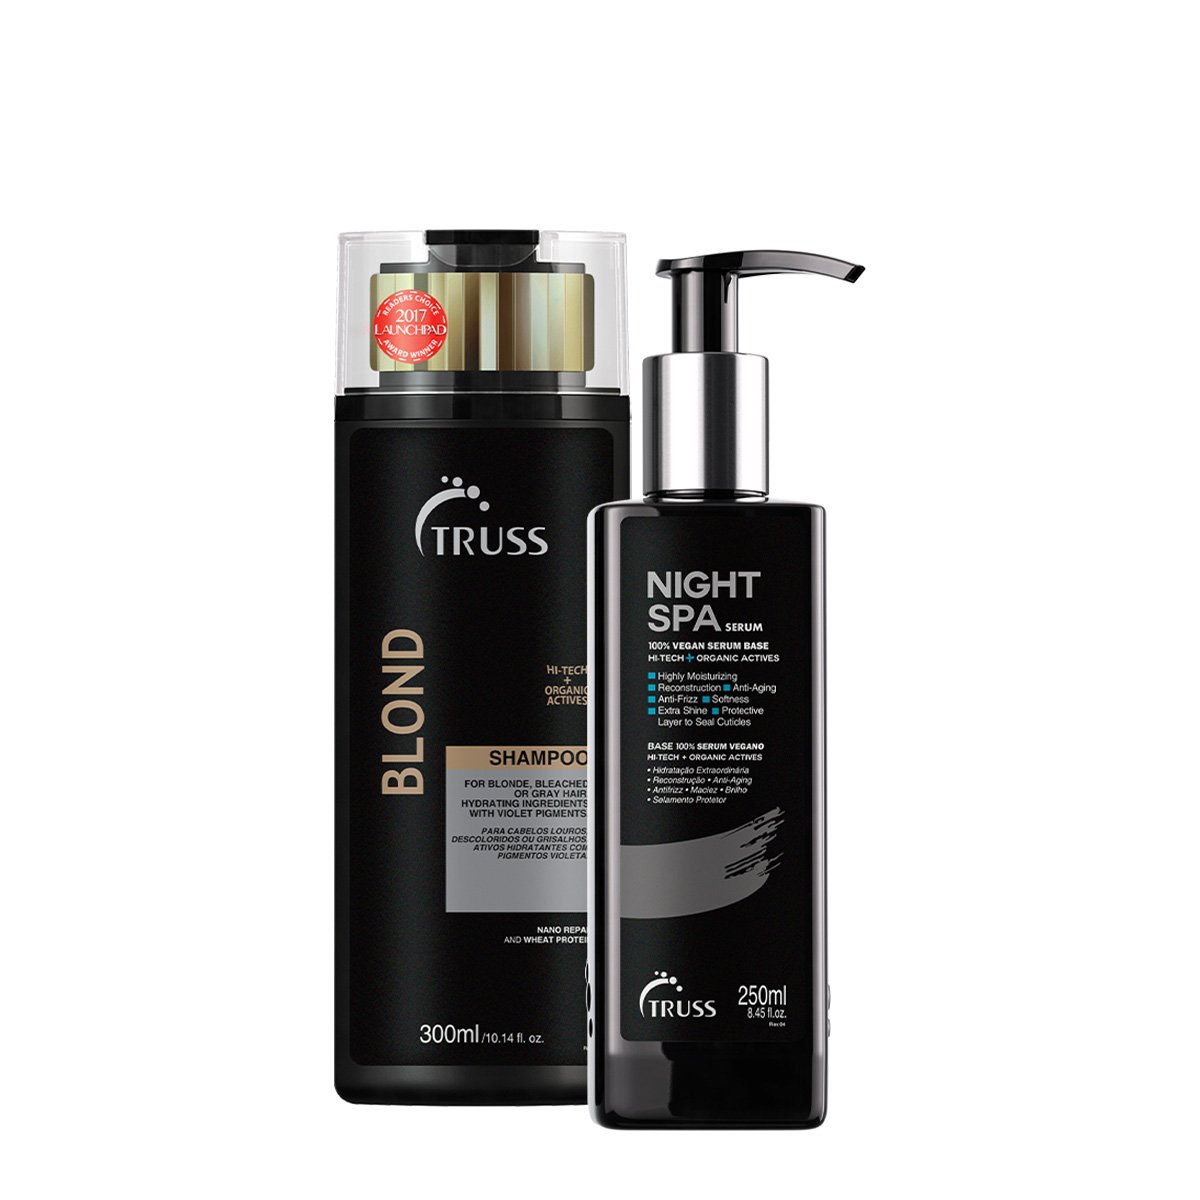 Kit Truss Blond Shampoo e Night Spa (2 produtos) ÚNICO 1